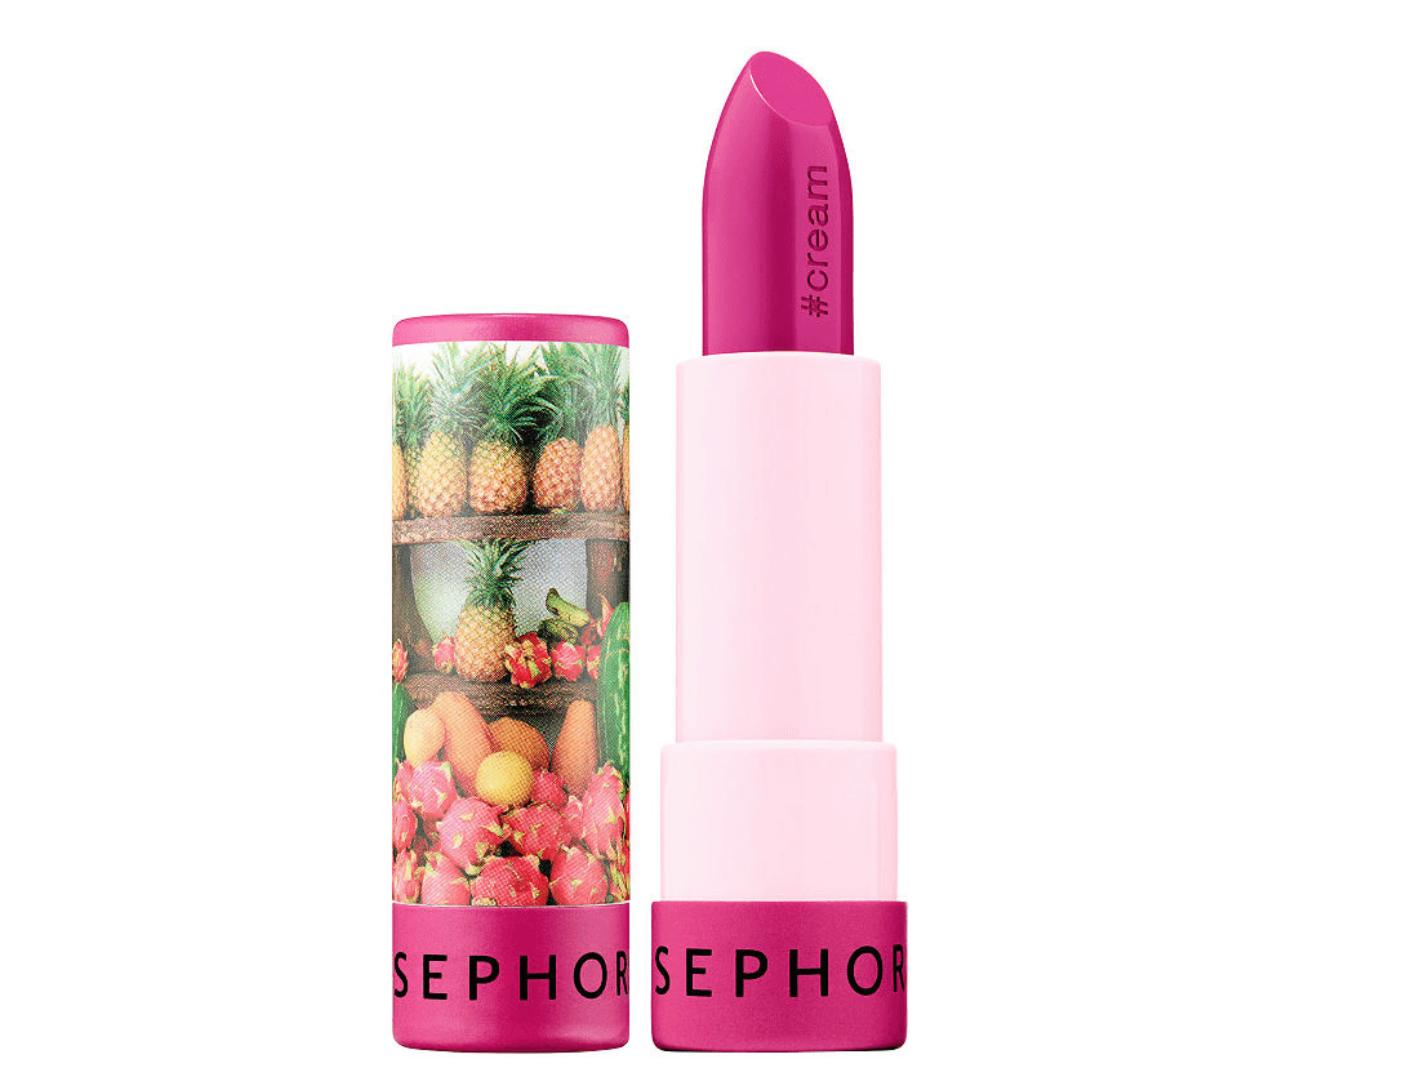 Sephora #Lipstories Lipstick Pineapple Express 21